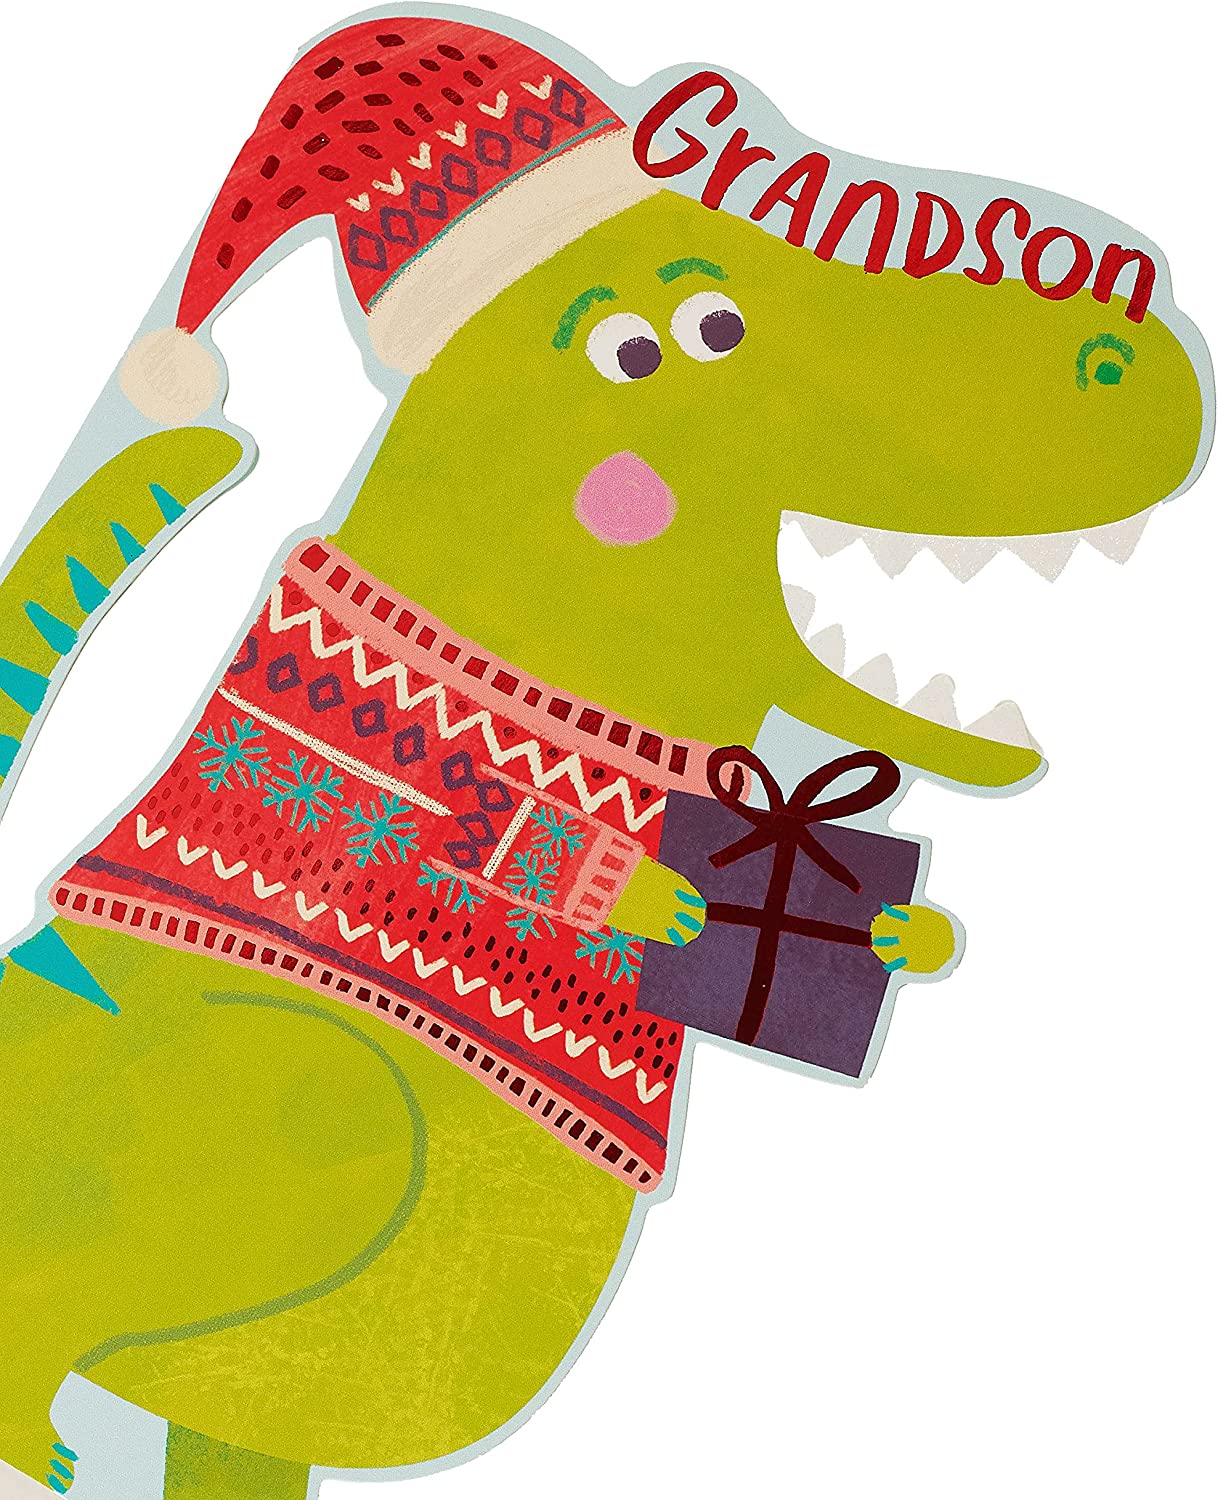 Dinosaur T Rex in Jumper Grandson Christmas Card